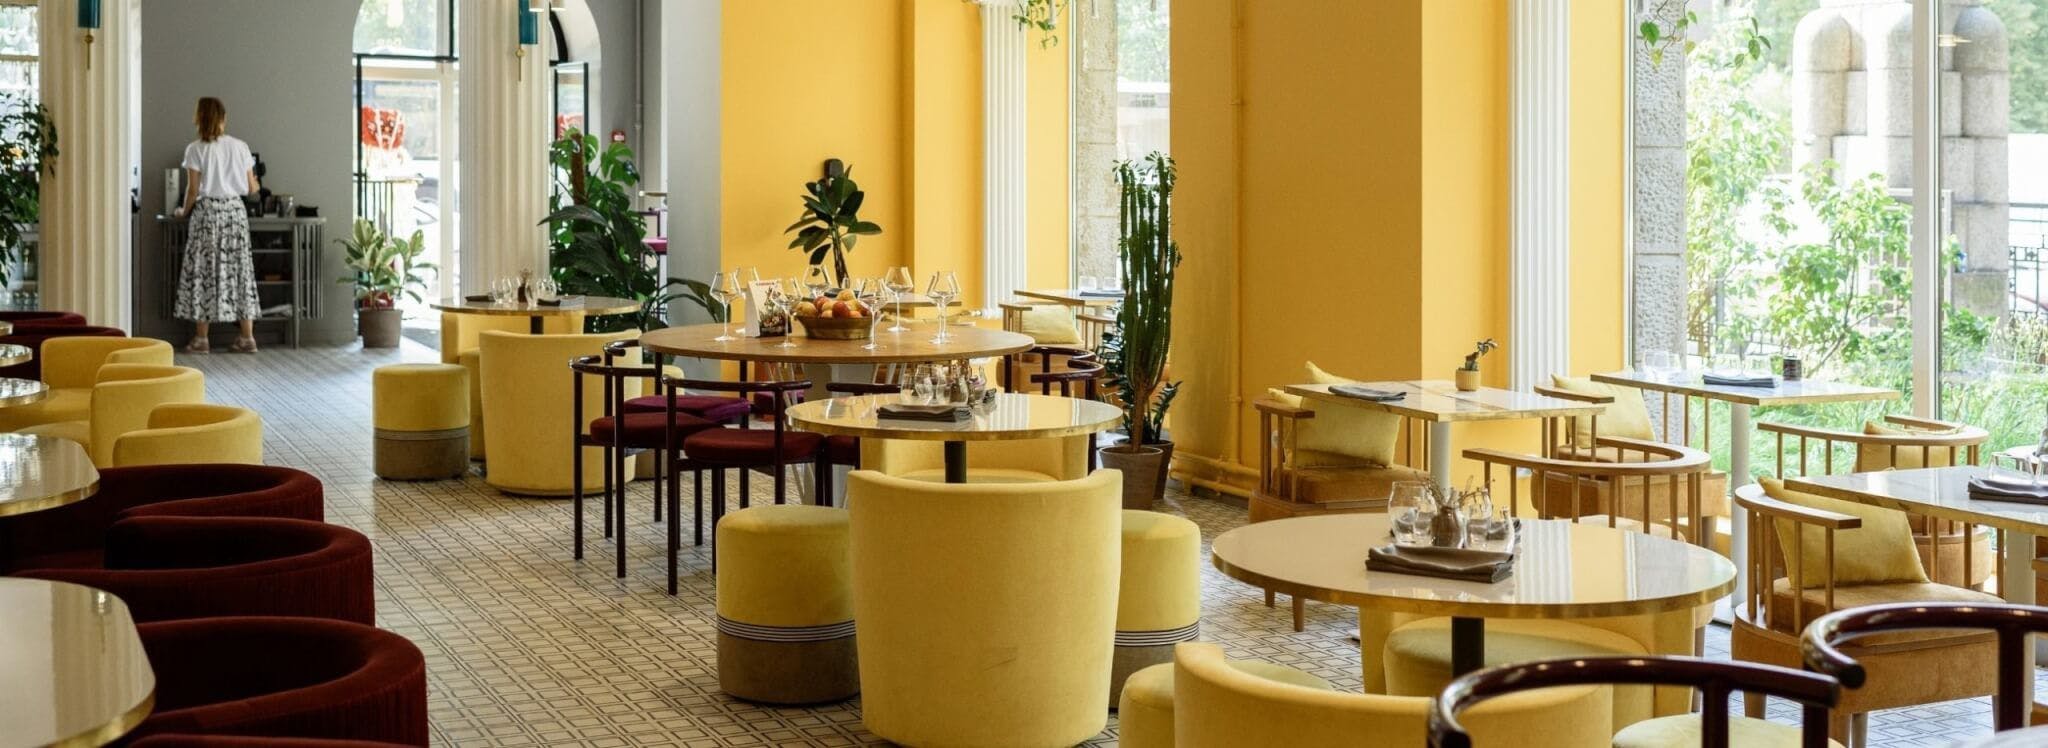 restaurant with yellow decor